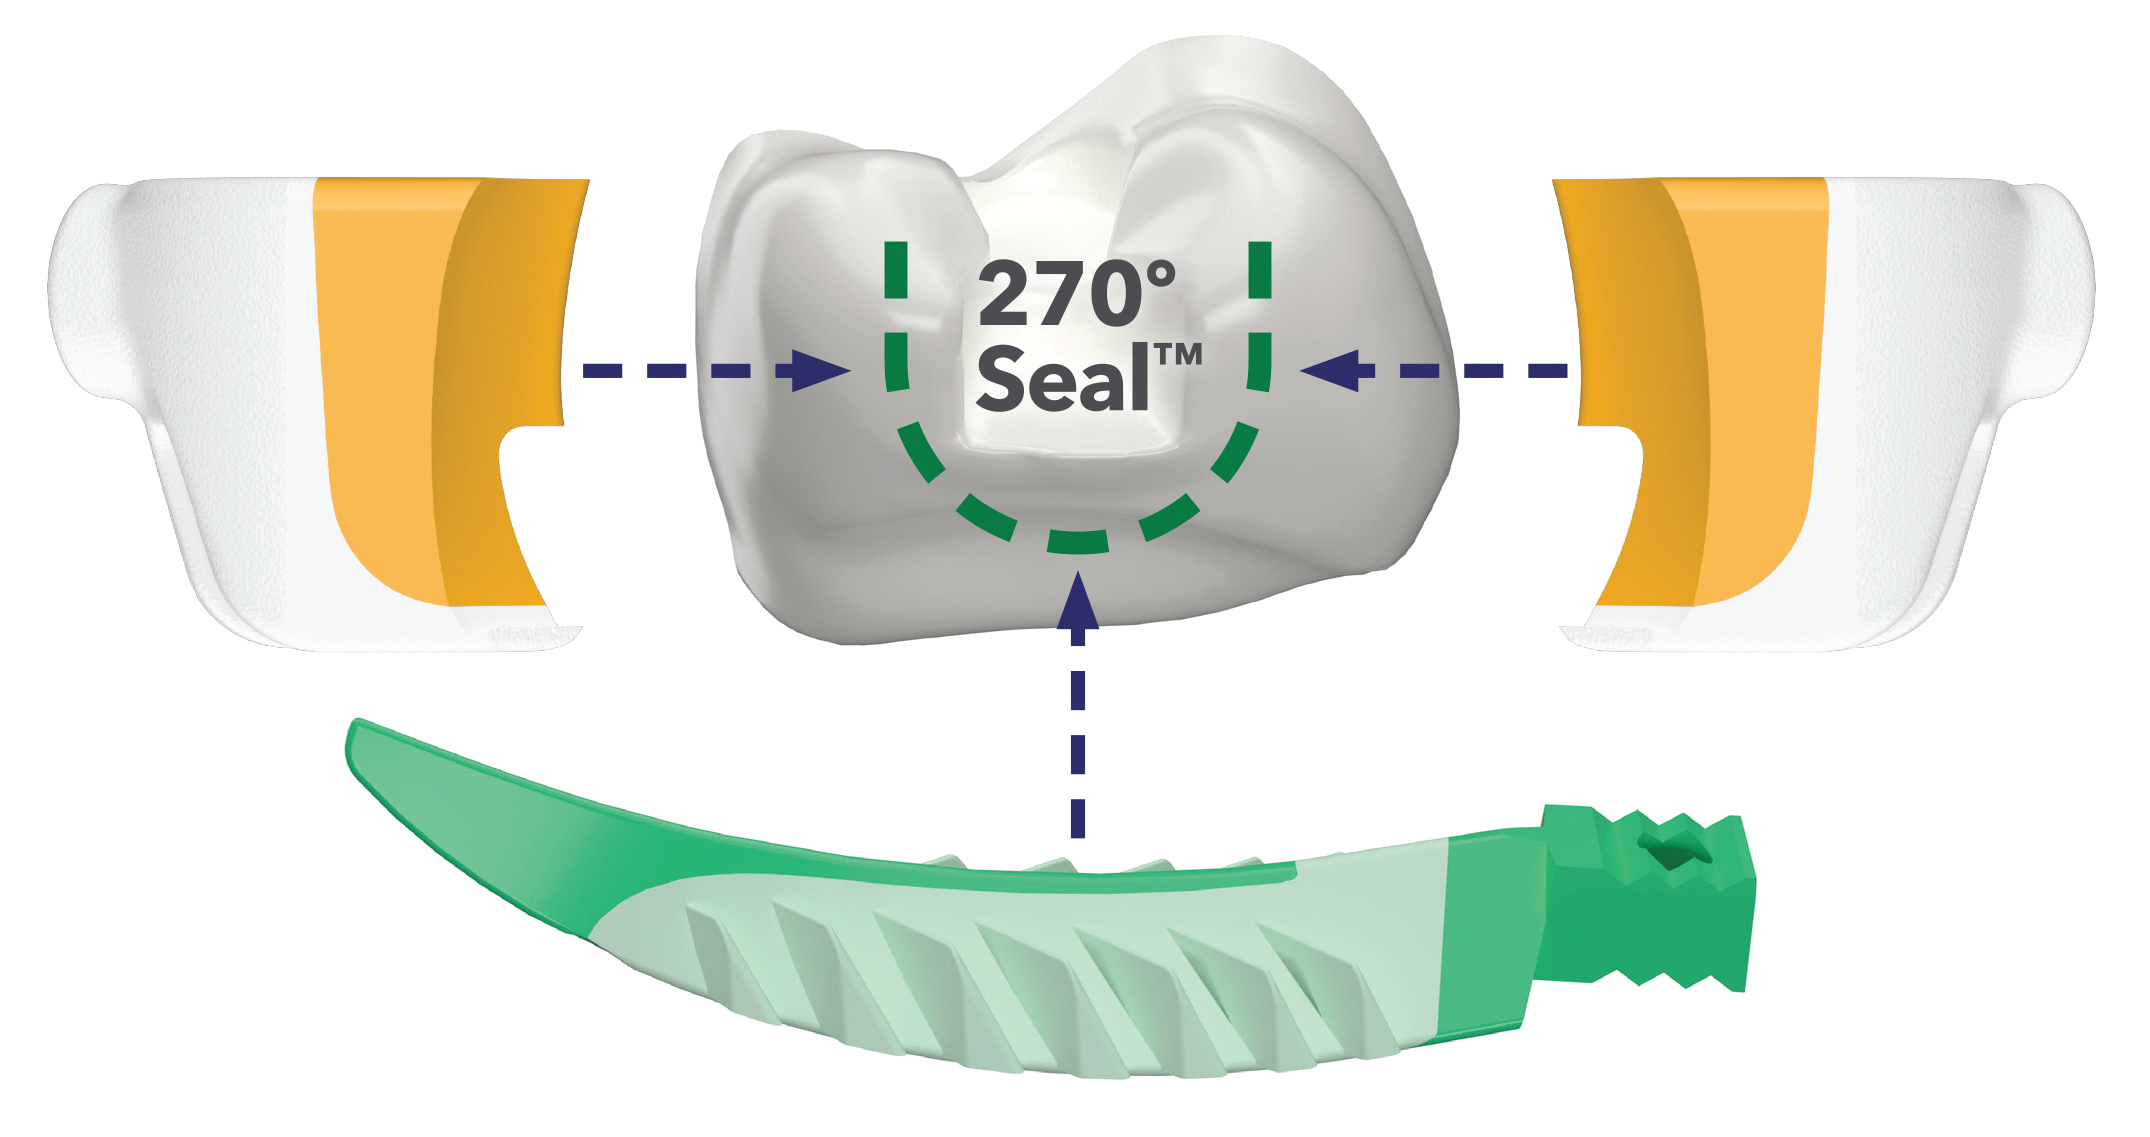 Strata-G 270 degree seal